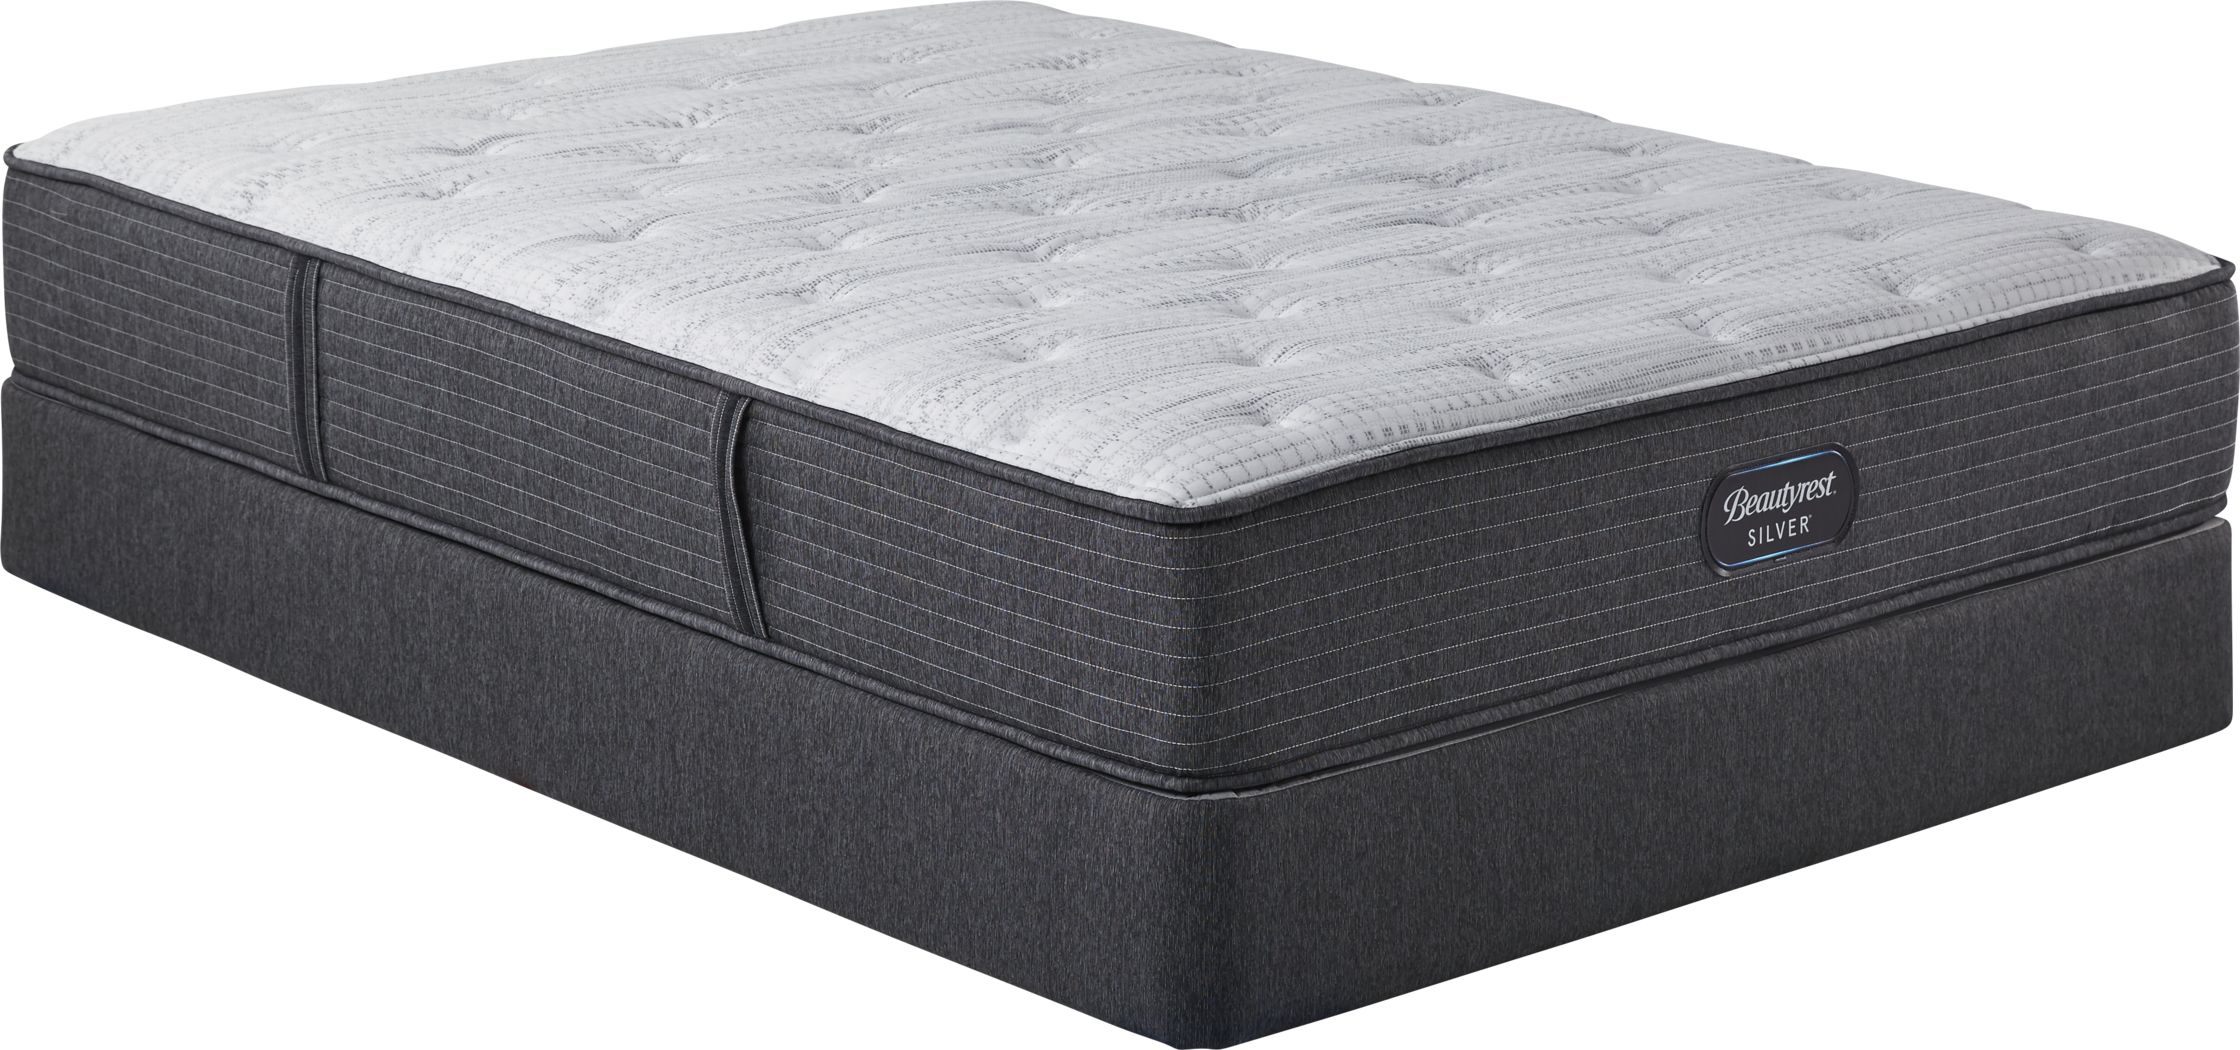 queen mattress on sale canada